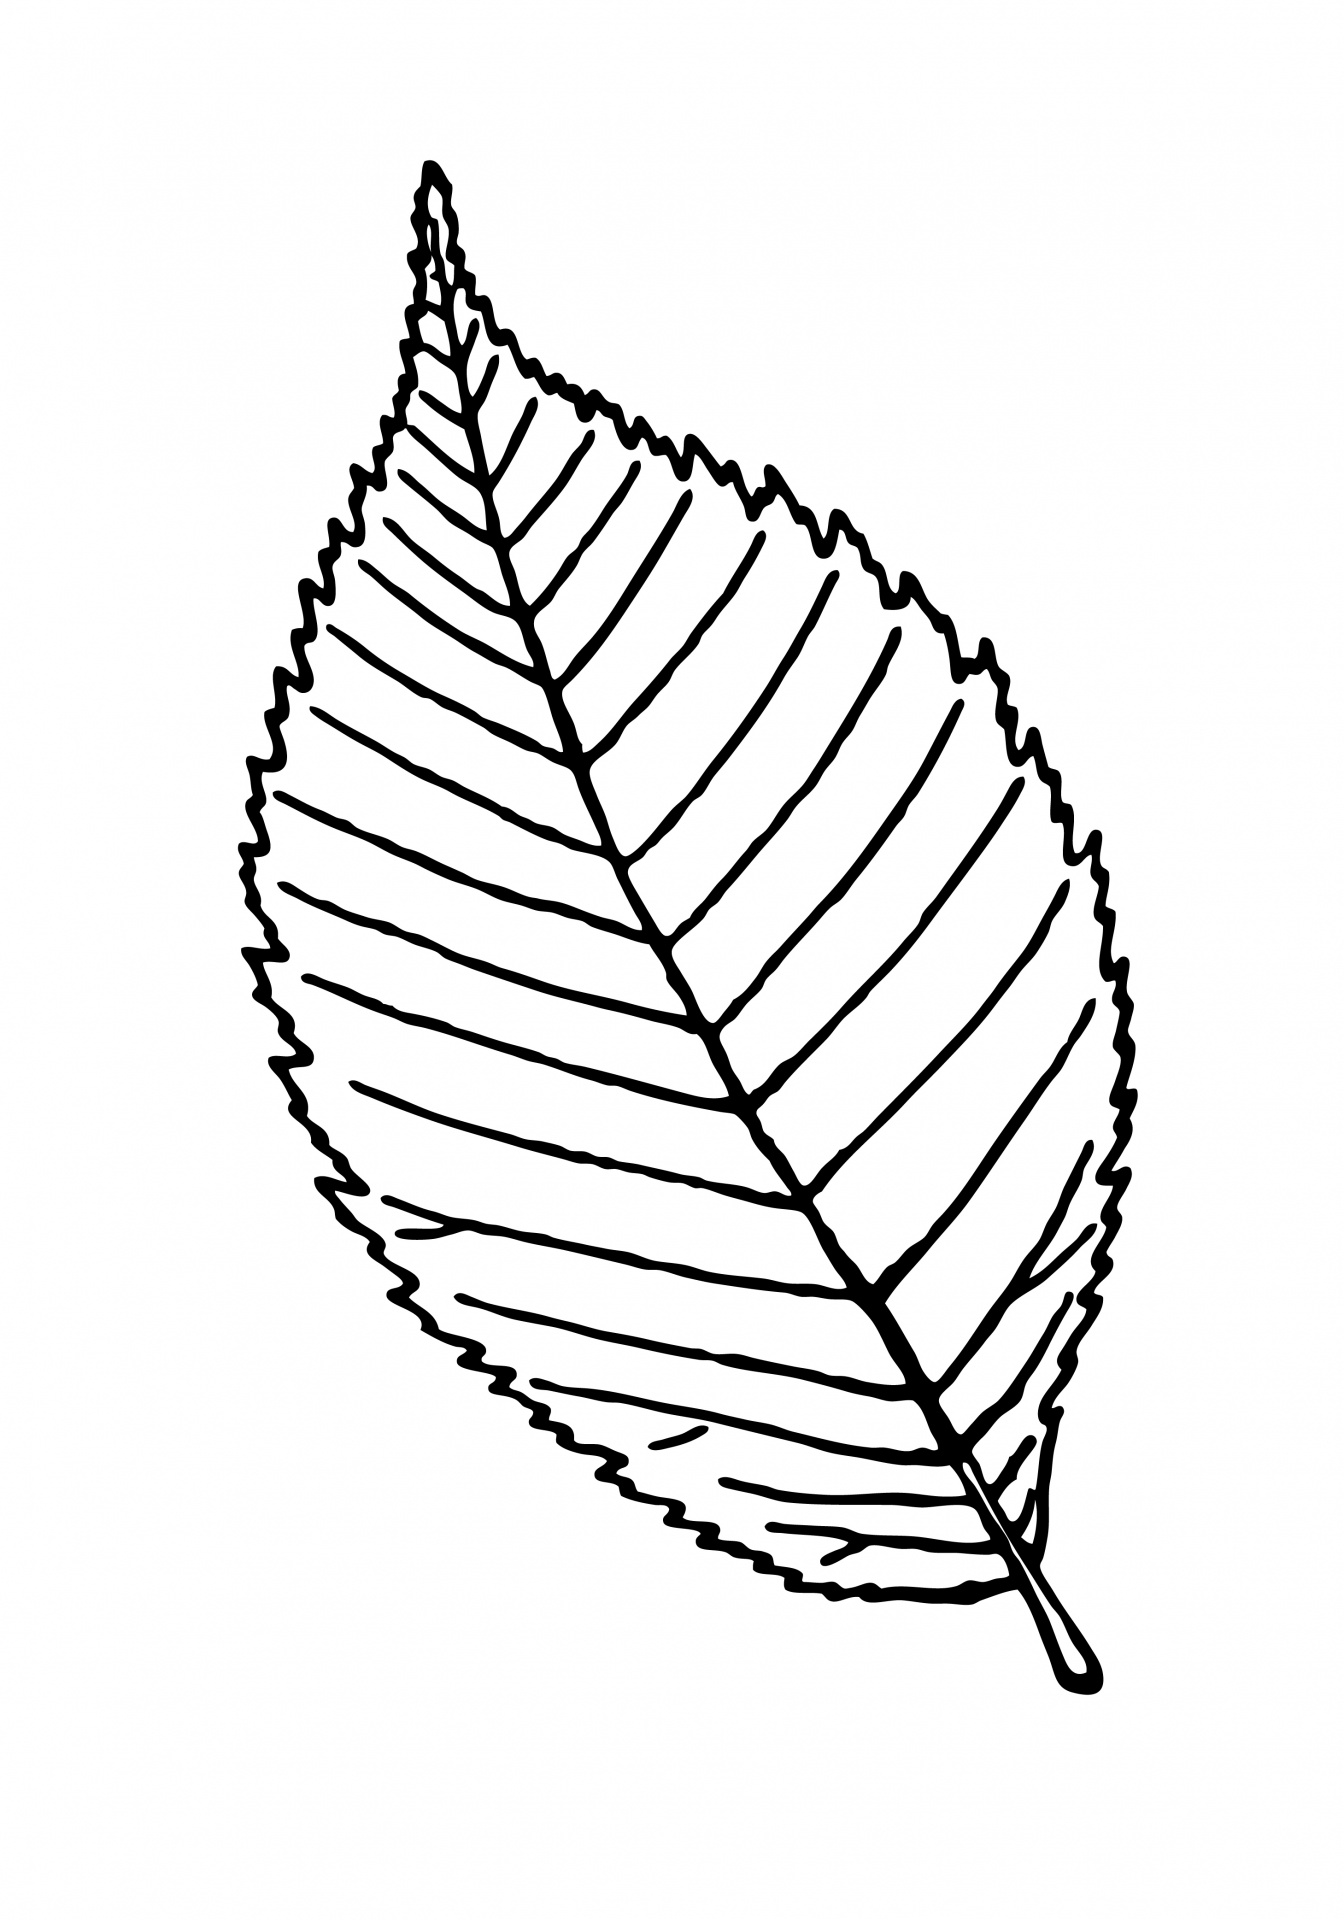 Leaf Outline Clipart Illustration Free Stock Photo - Public Domain ...